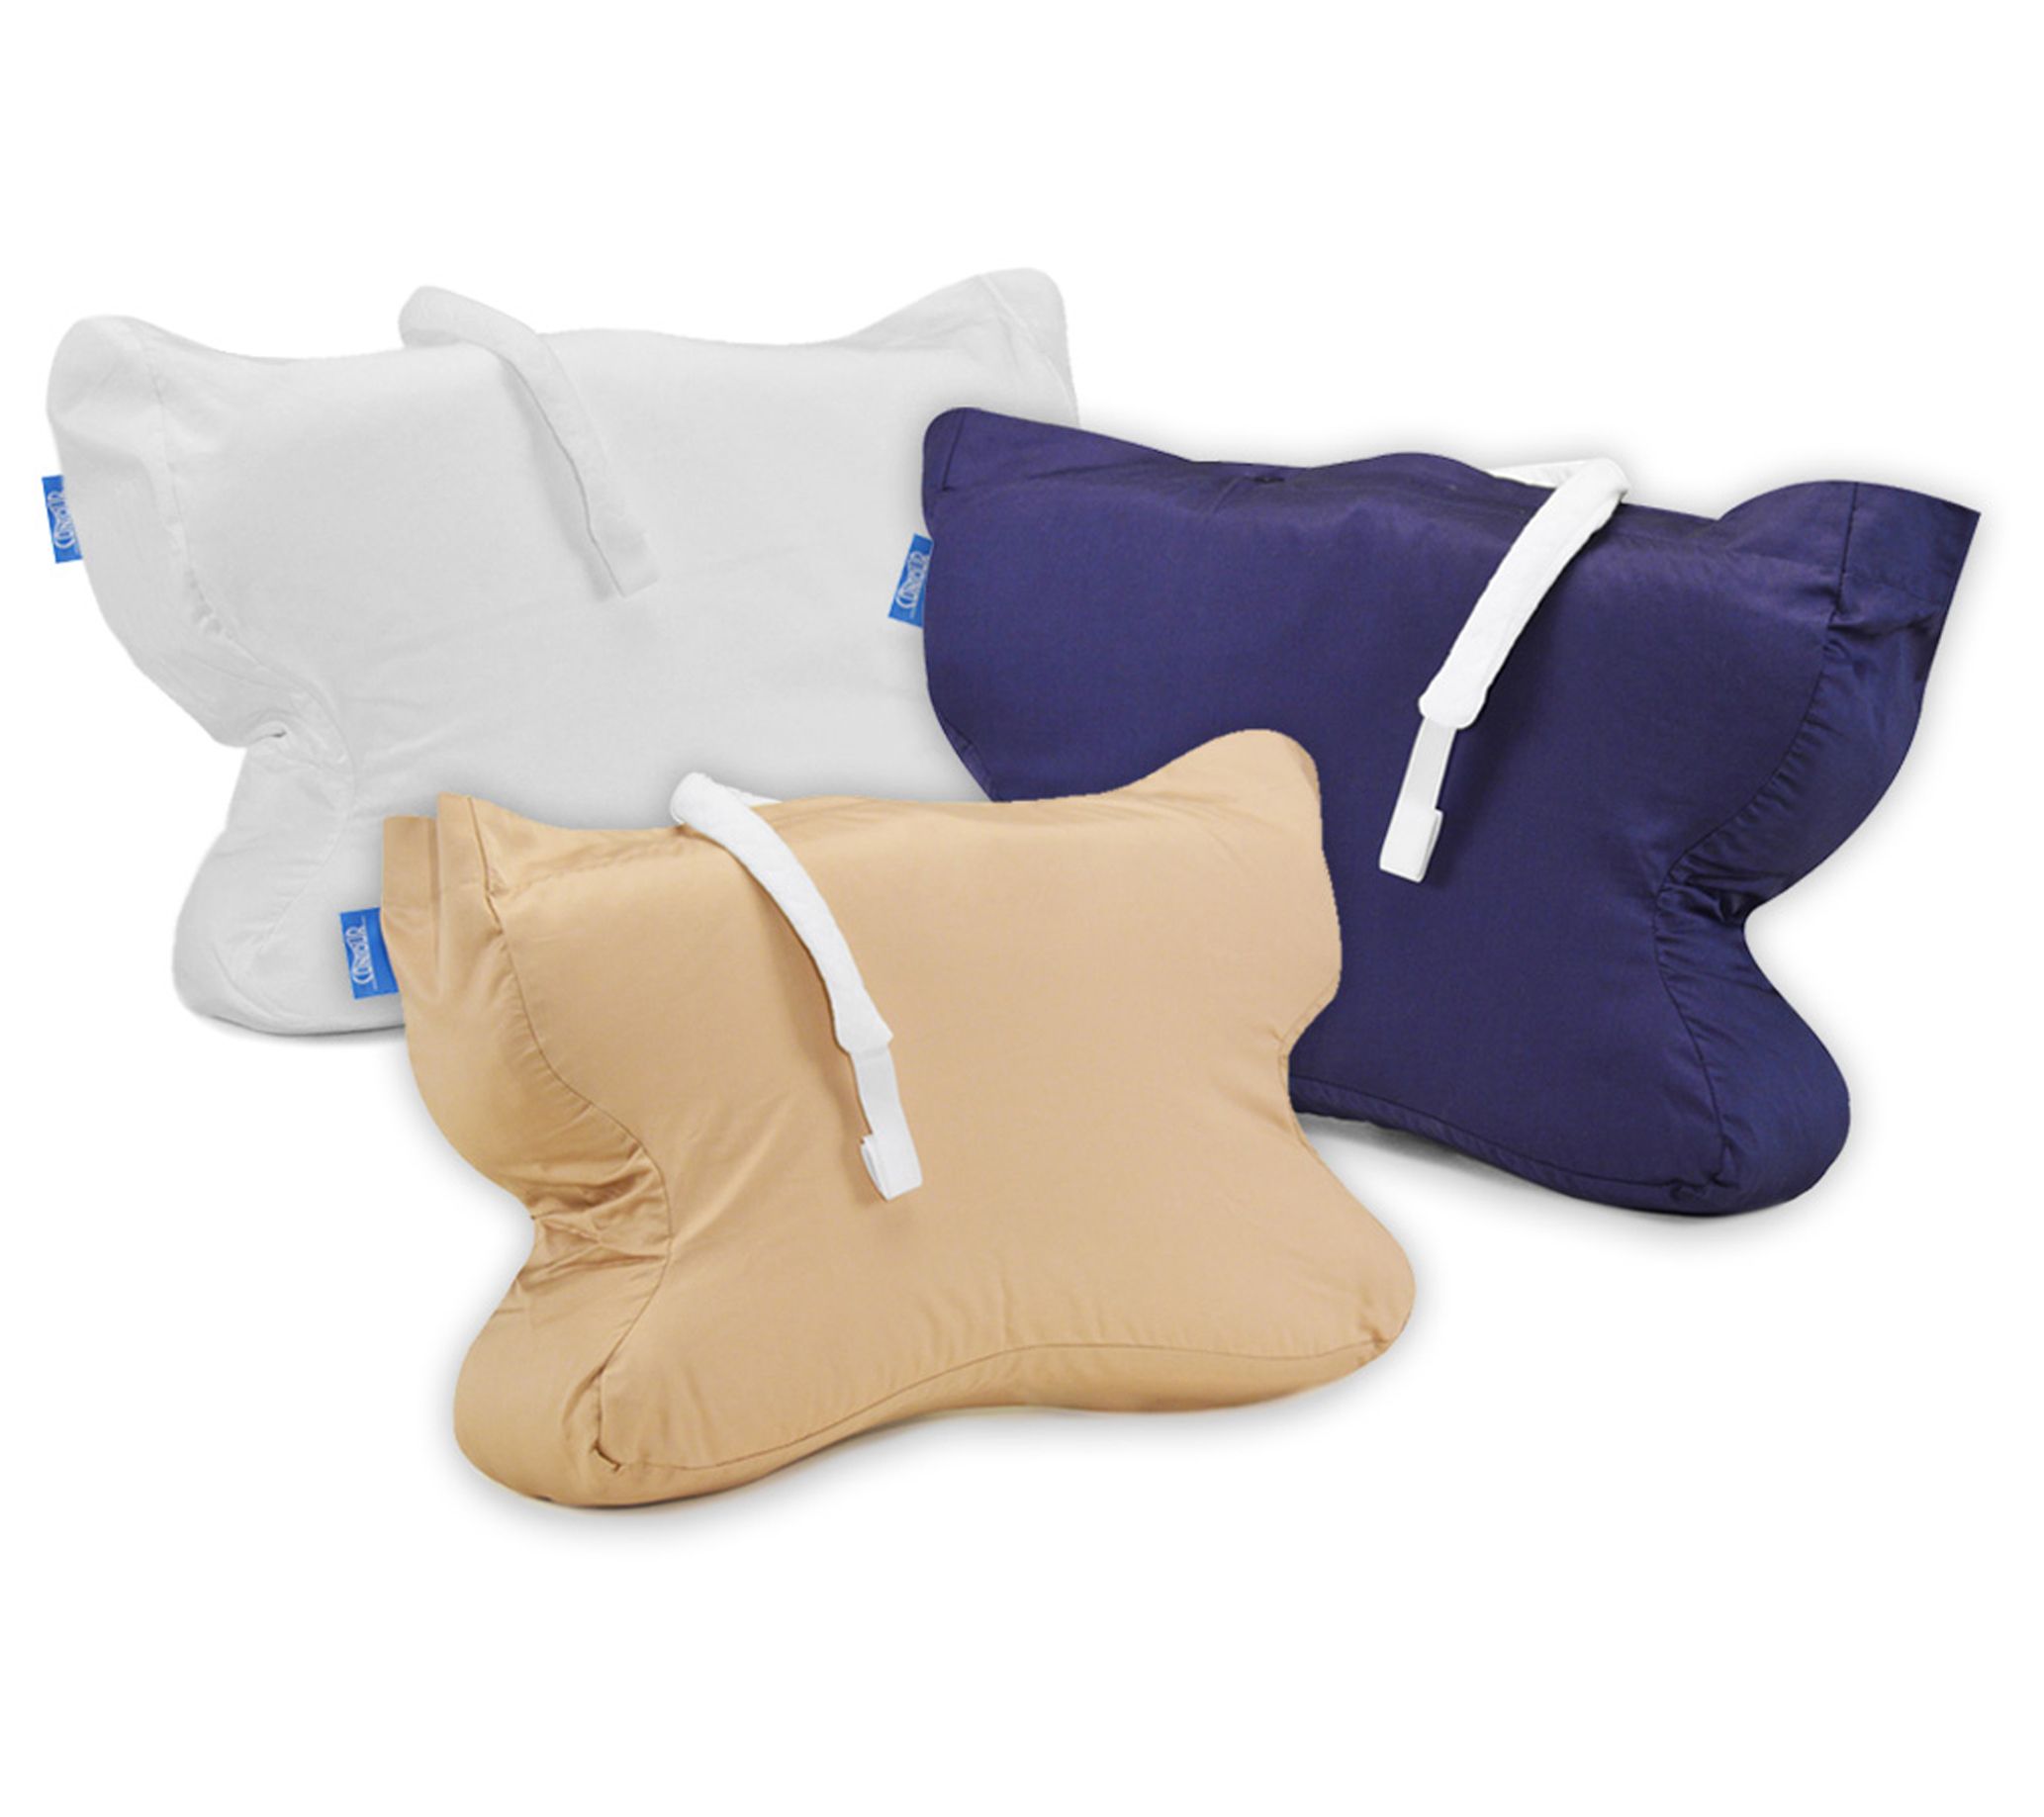 Contour CPAPMax 2.0 Pillow